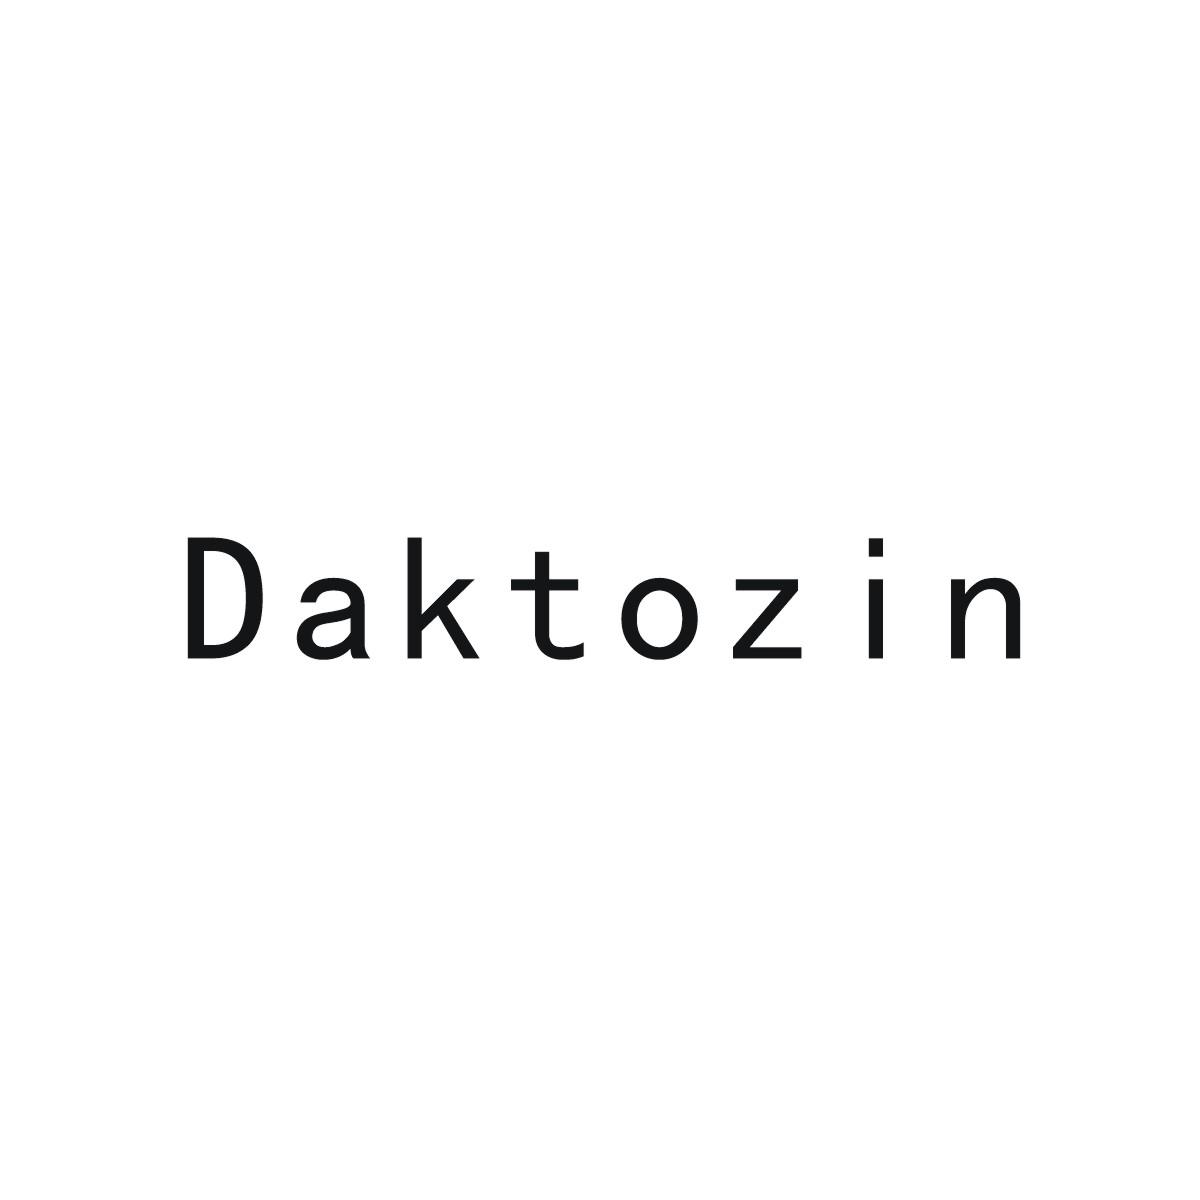 DAKTOZIN粘合剂商标转让费用买卖交易流程